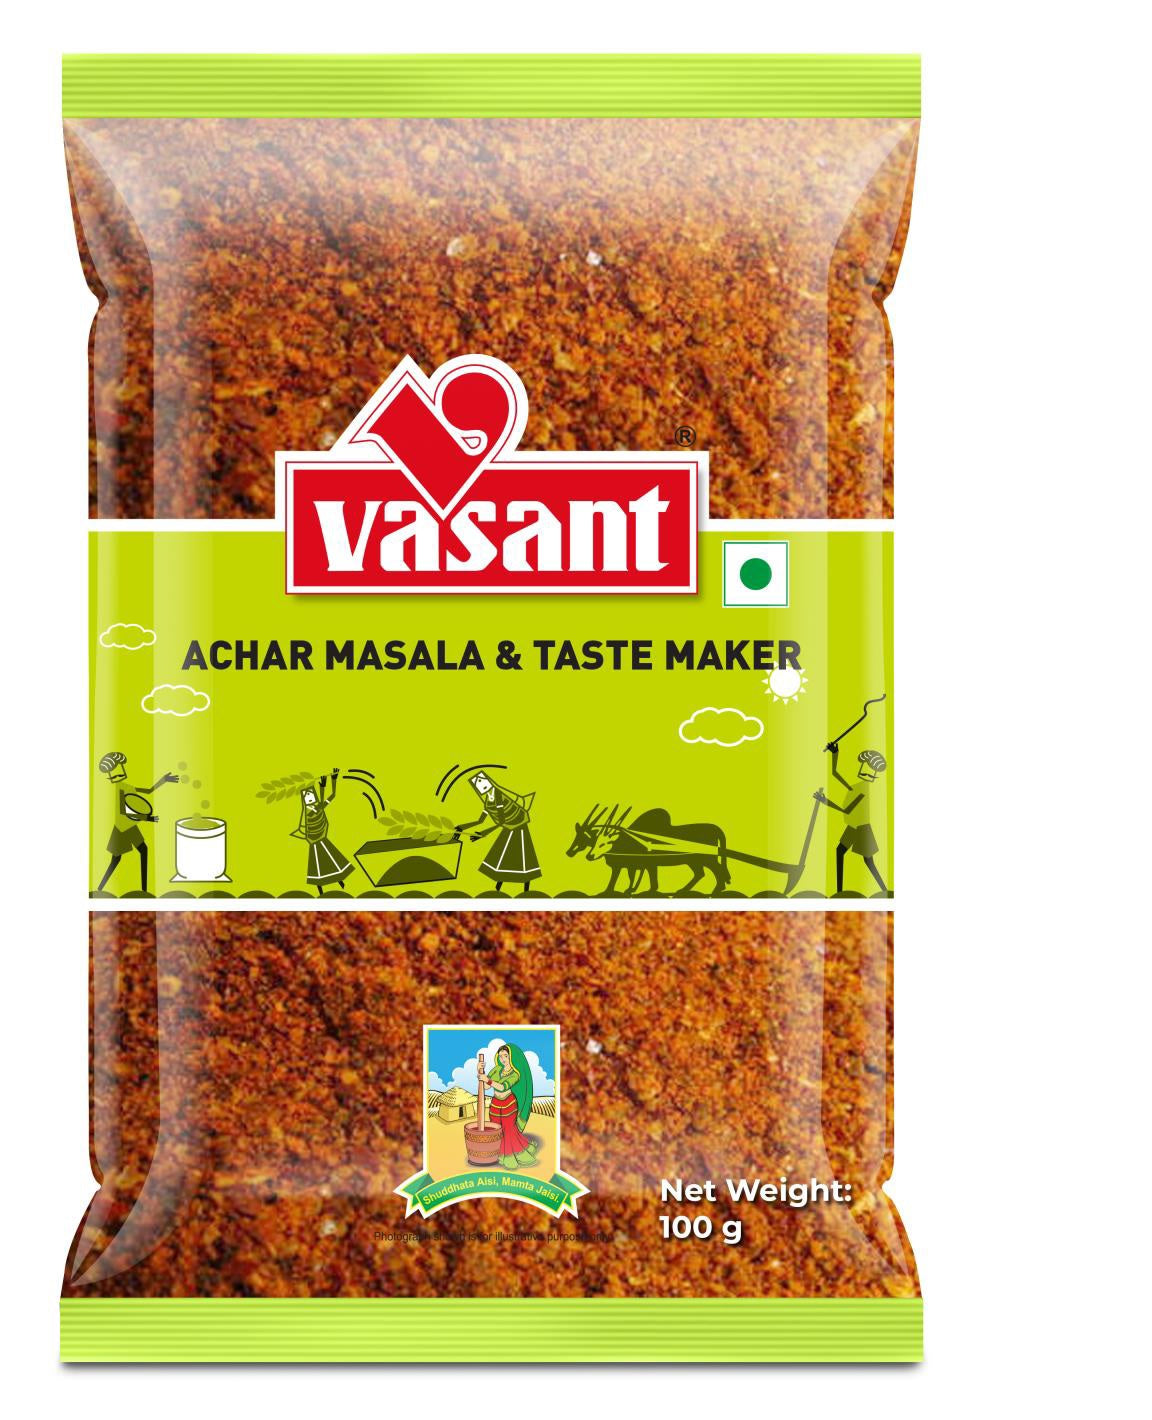 Vasant Masala Achar Masala & Taste Maker 100g Achar Masala Organichub   